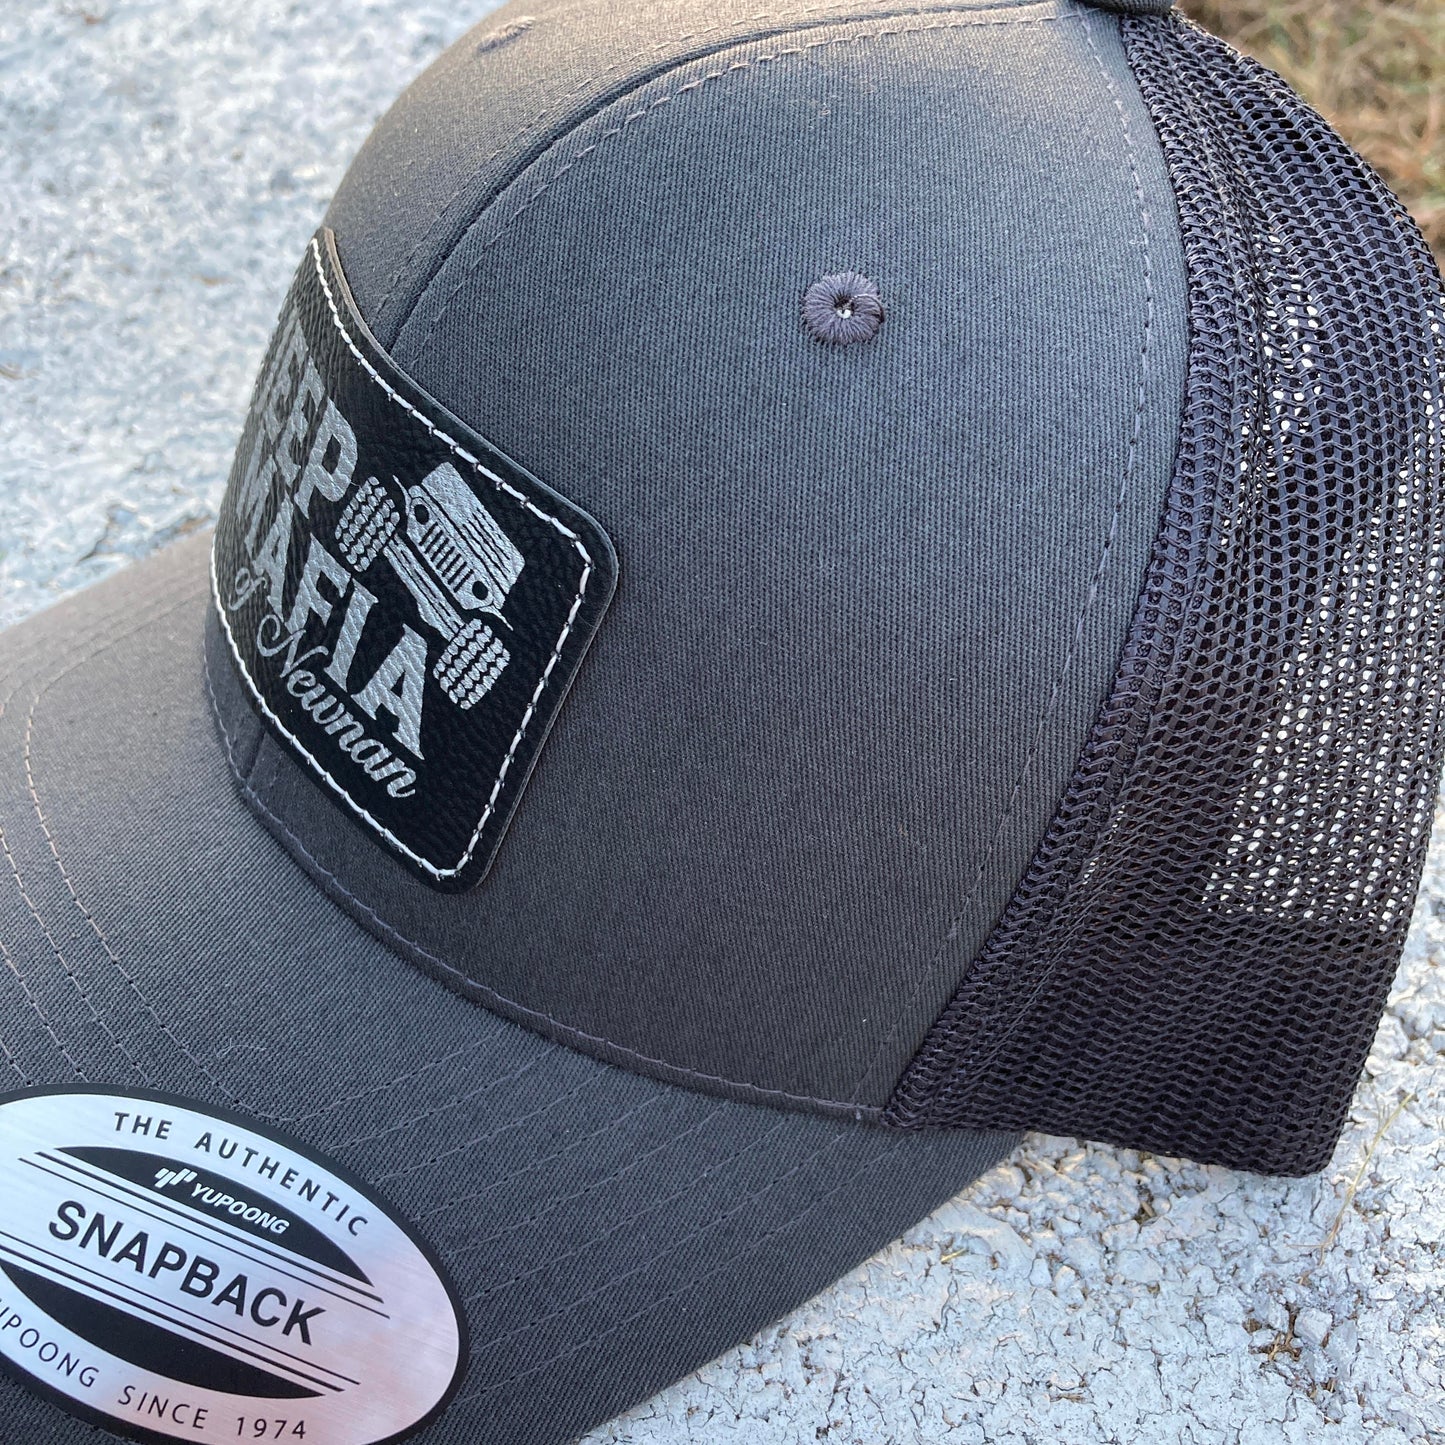 Charcoal Gray and Black Mesh Snapback Jeep Mafia of Newnan Hat